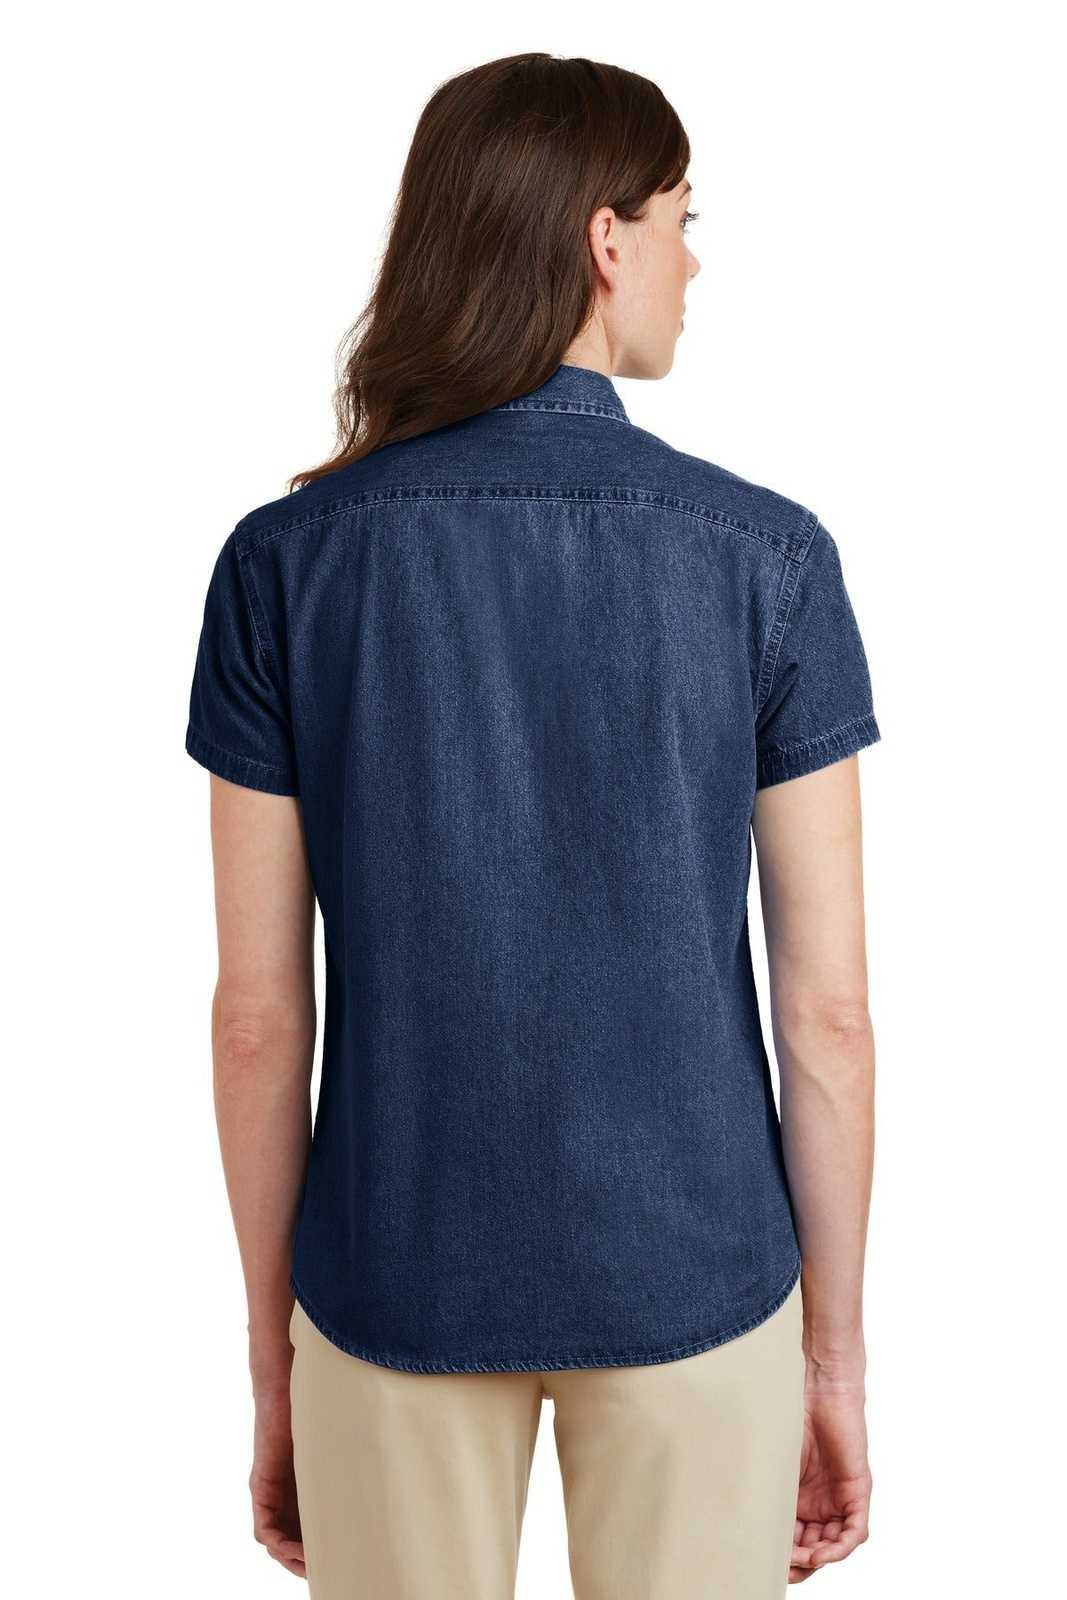 Port &amp; Company LSP11 Ladies Short Sleeve Value Denim Shirt - Ink Blue - HIT a Double - 2